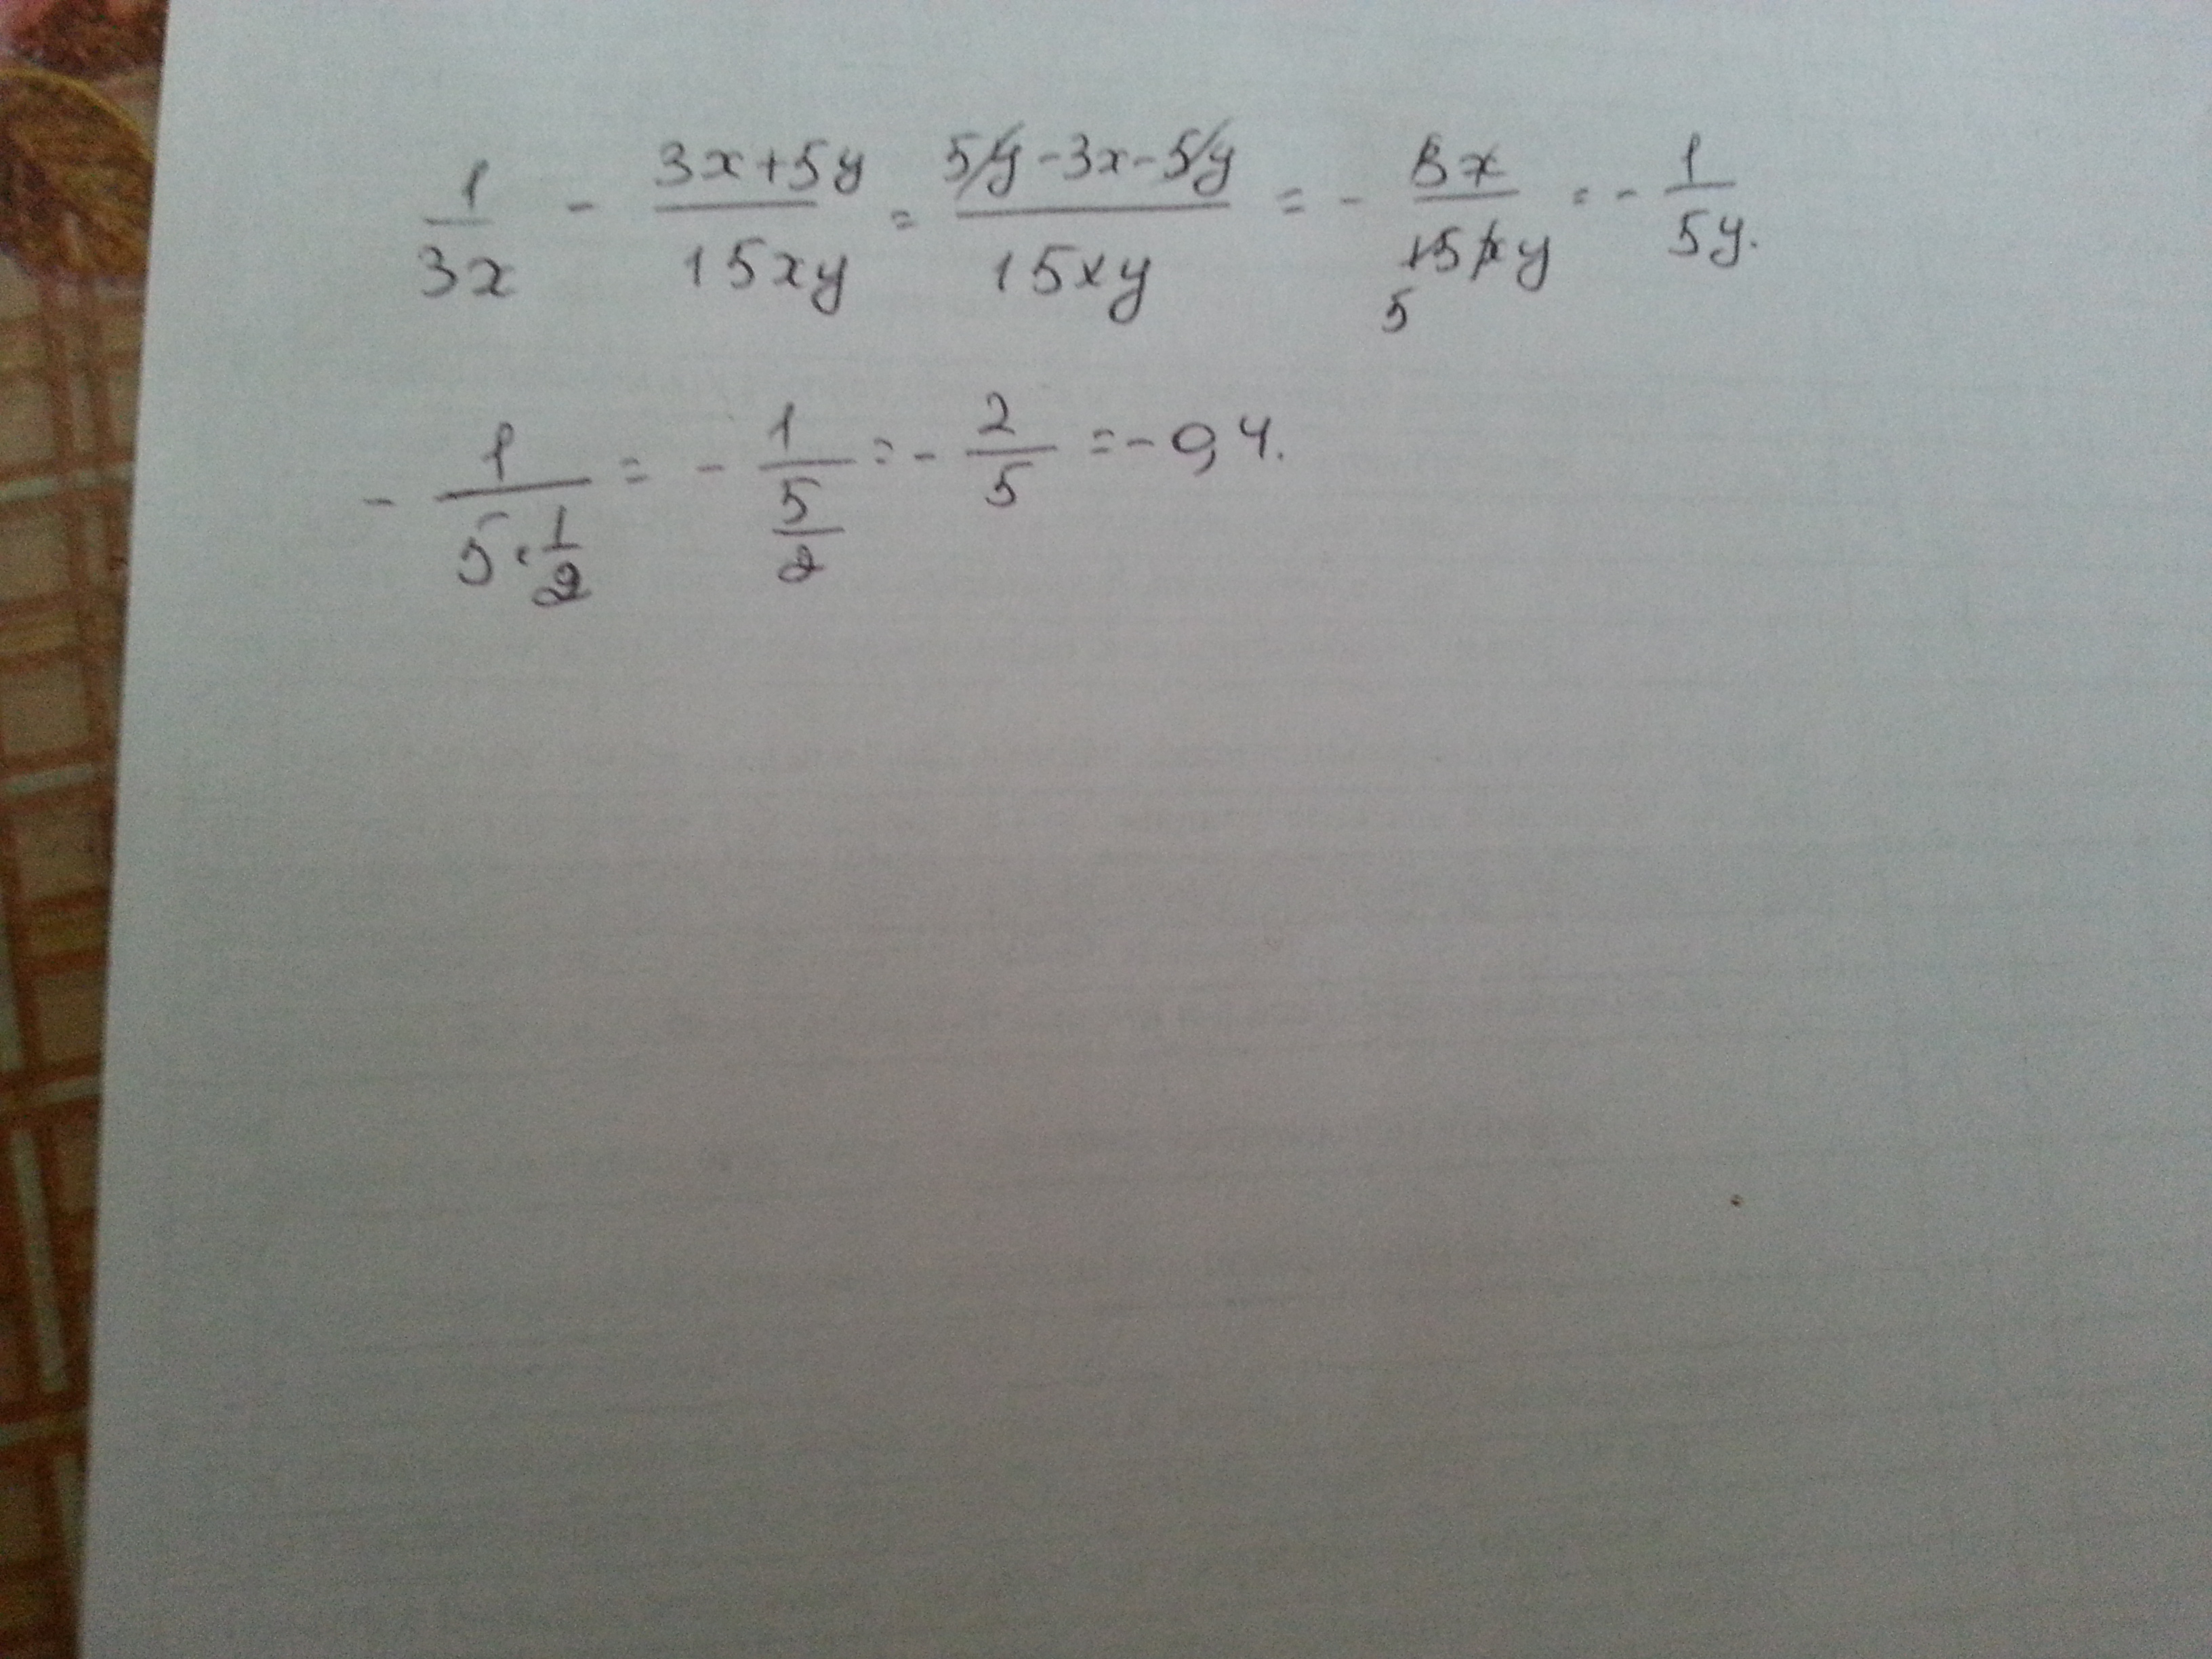 1 45 7 3 x. 1/3x-3x+5y/15xy при x корень из 45 y 1/2. Найдите значение выражения | минус 4| плюс |1 минус 3x| при x=2,4.. 1/3x 3x+5y/15xy. 1 3 5 3 15x y x XY + − при x = 45 , 12 y = ..